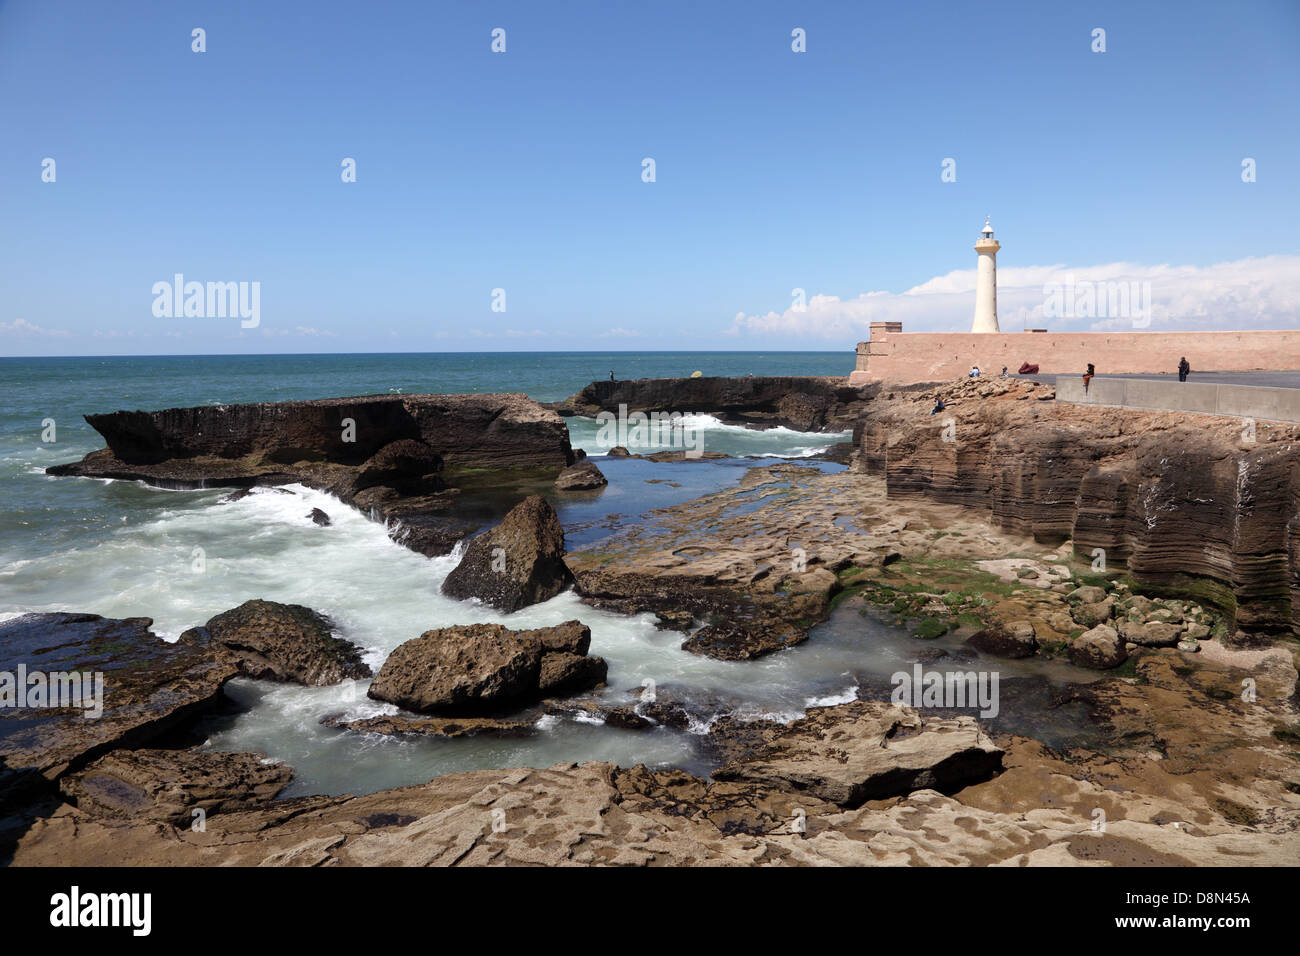 Lighthouse on the atlantic coast of Rabat, Morocco Stock Photo